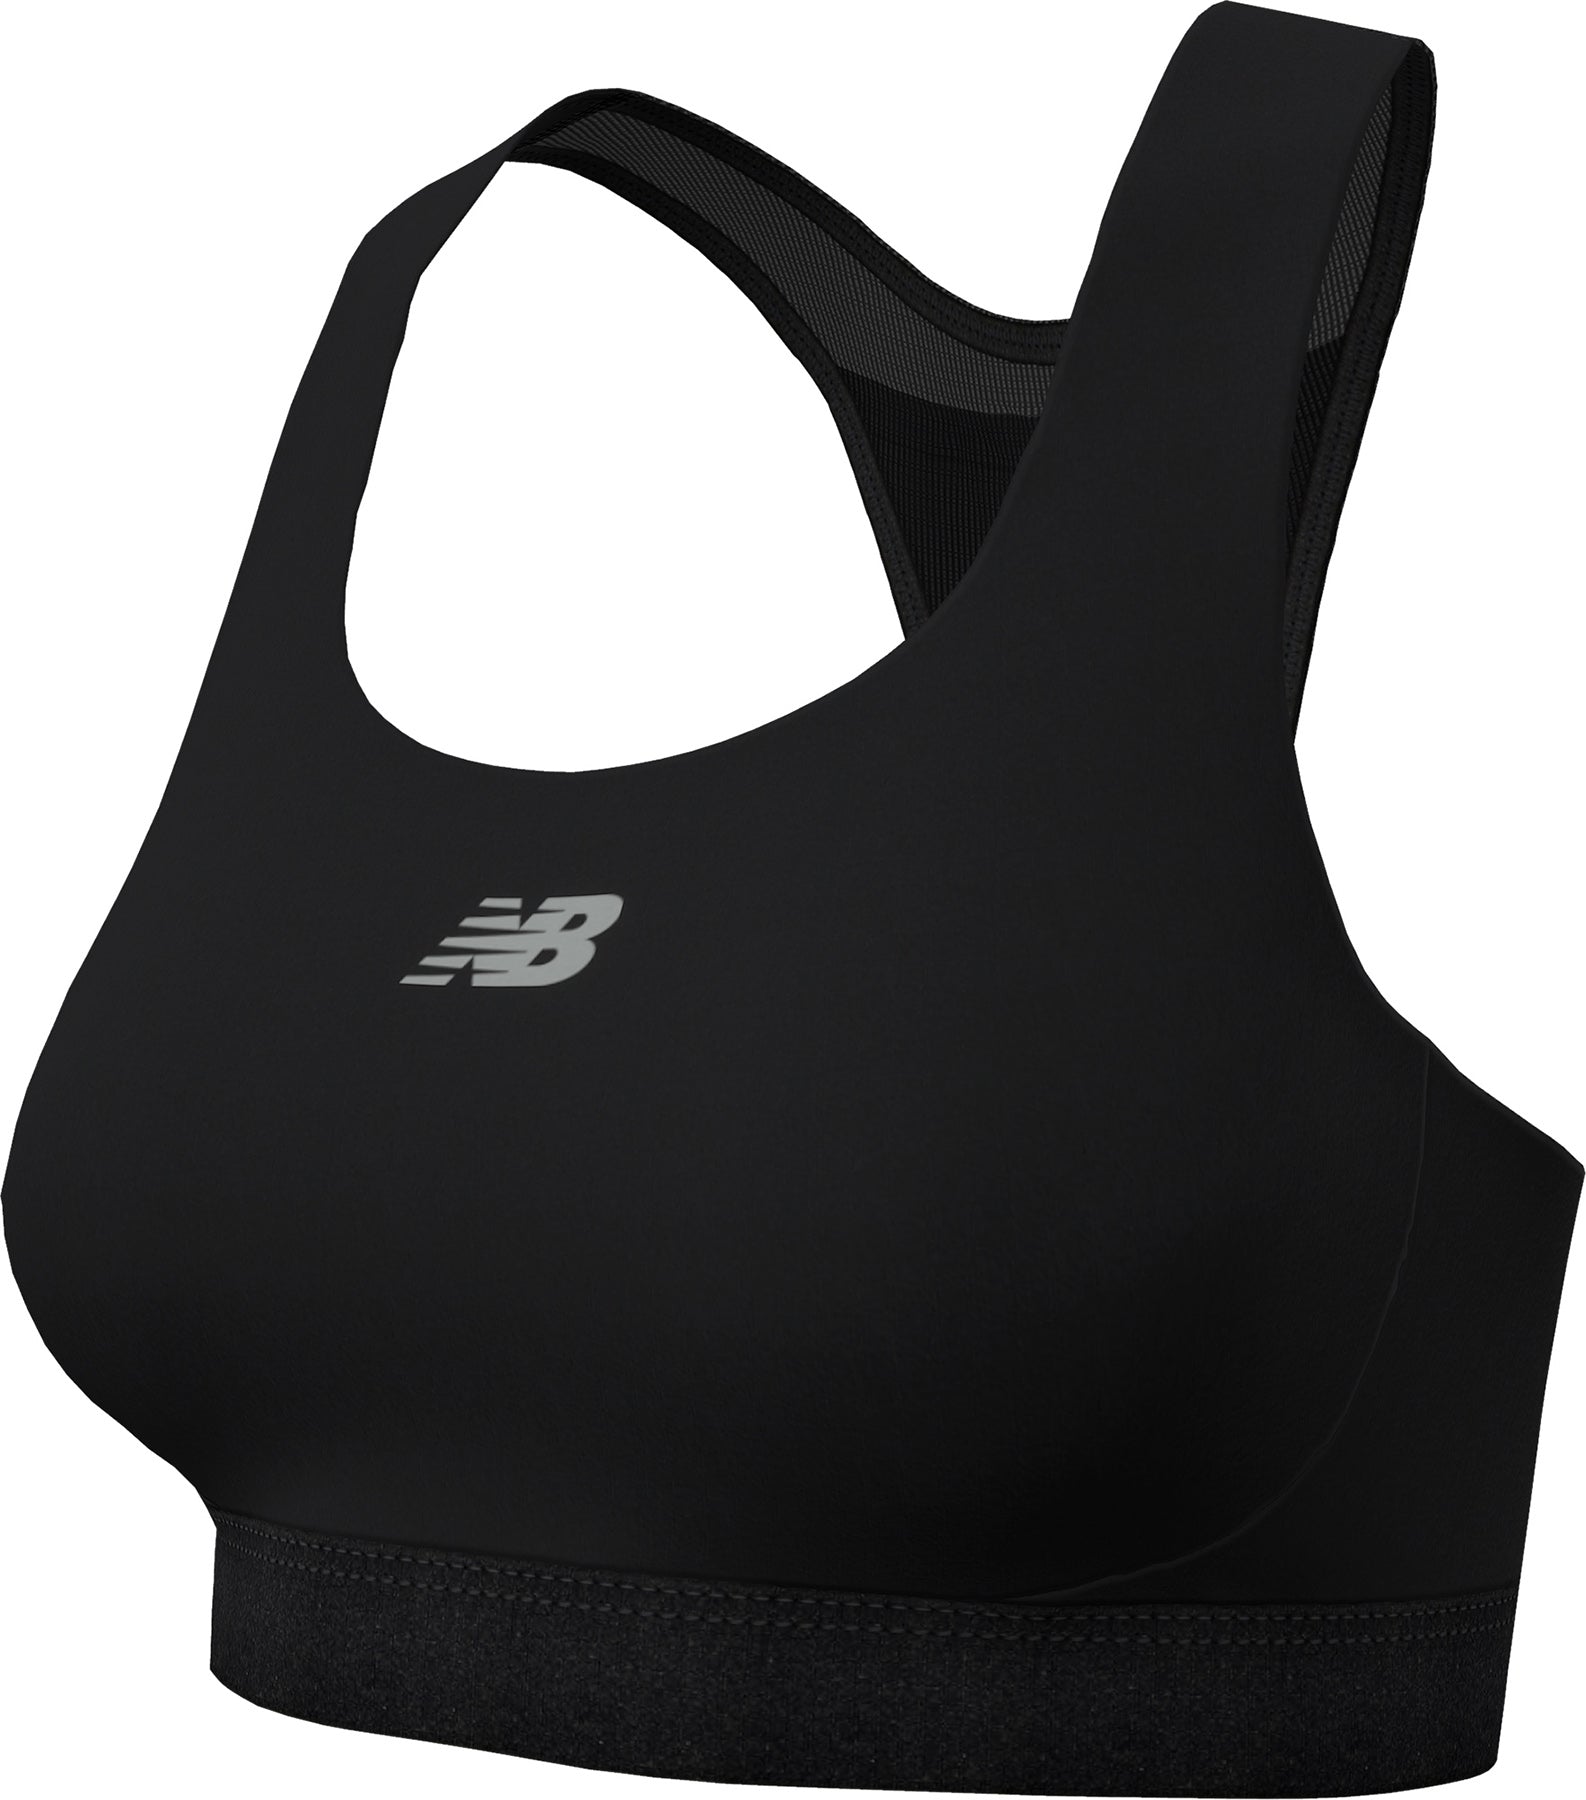 New Balance Sleek Medium Support Pocket Sports Bra - Women's